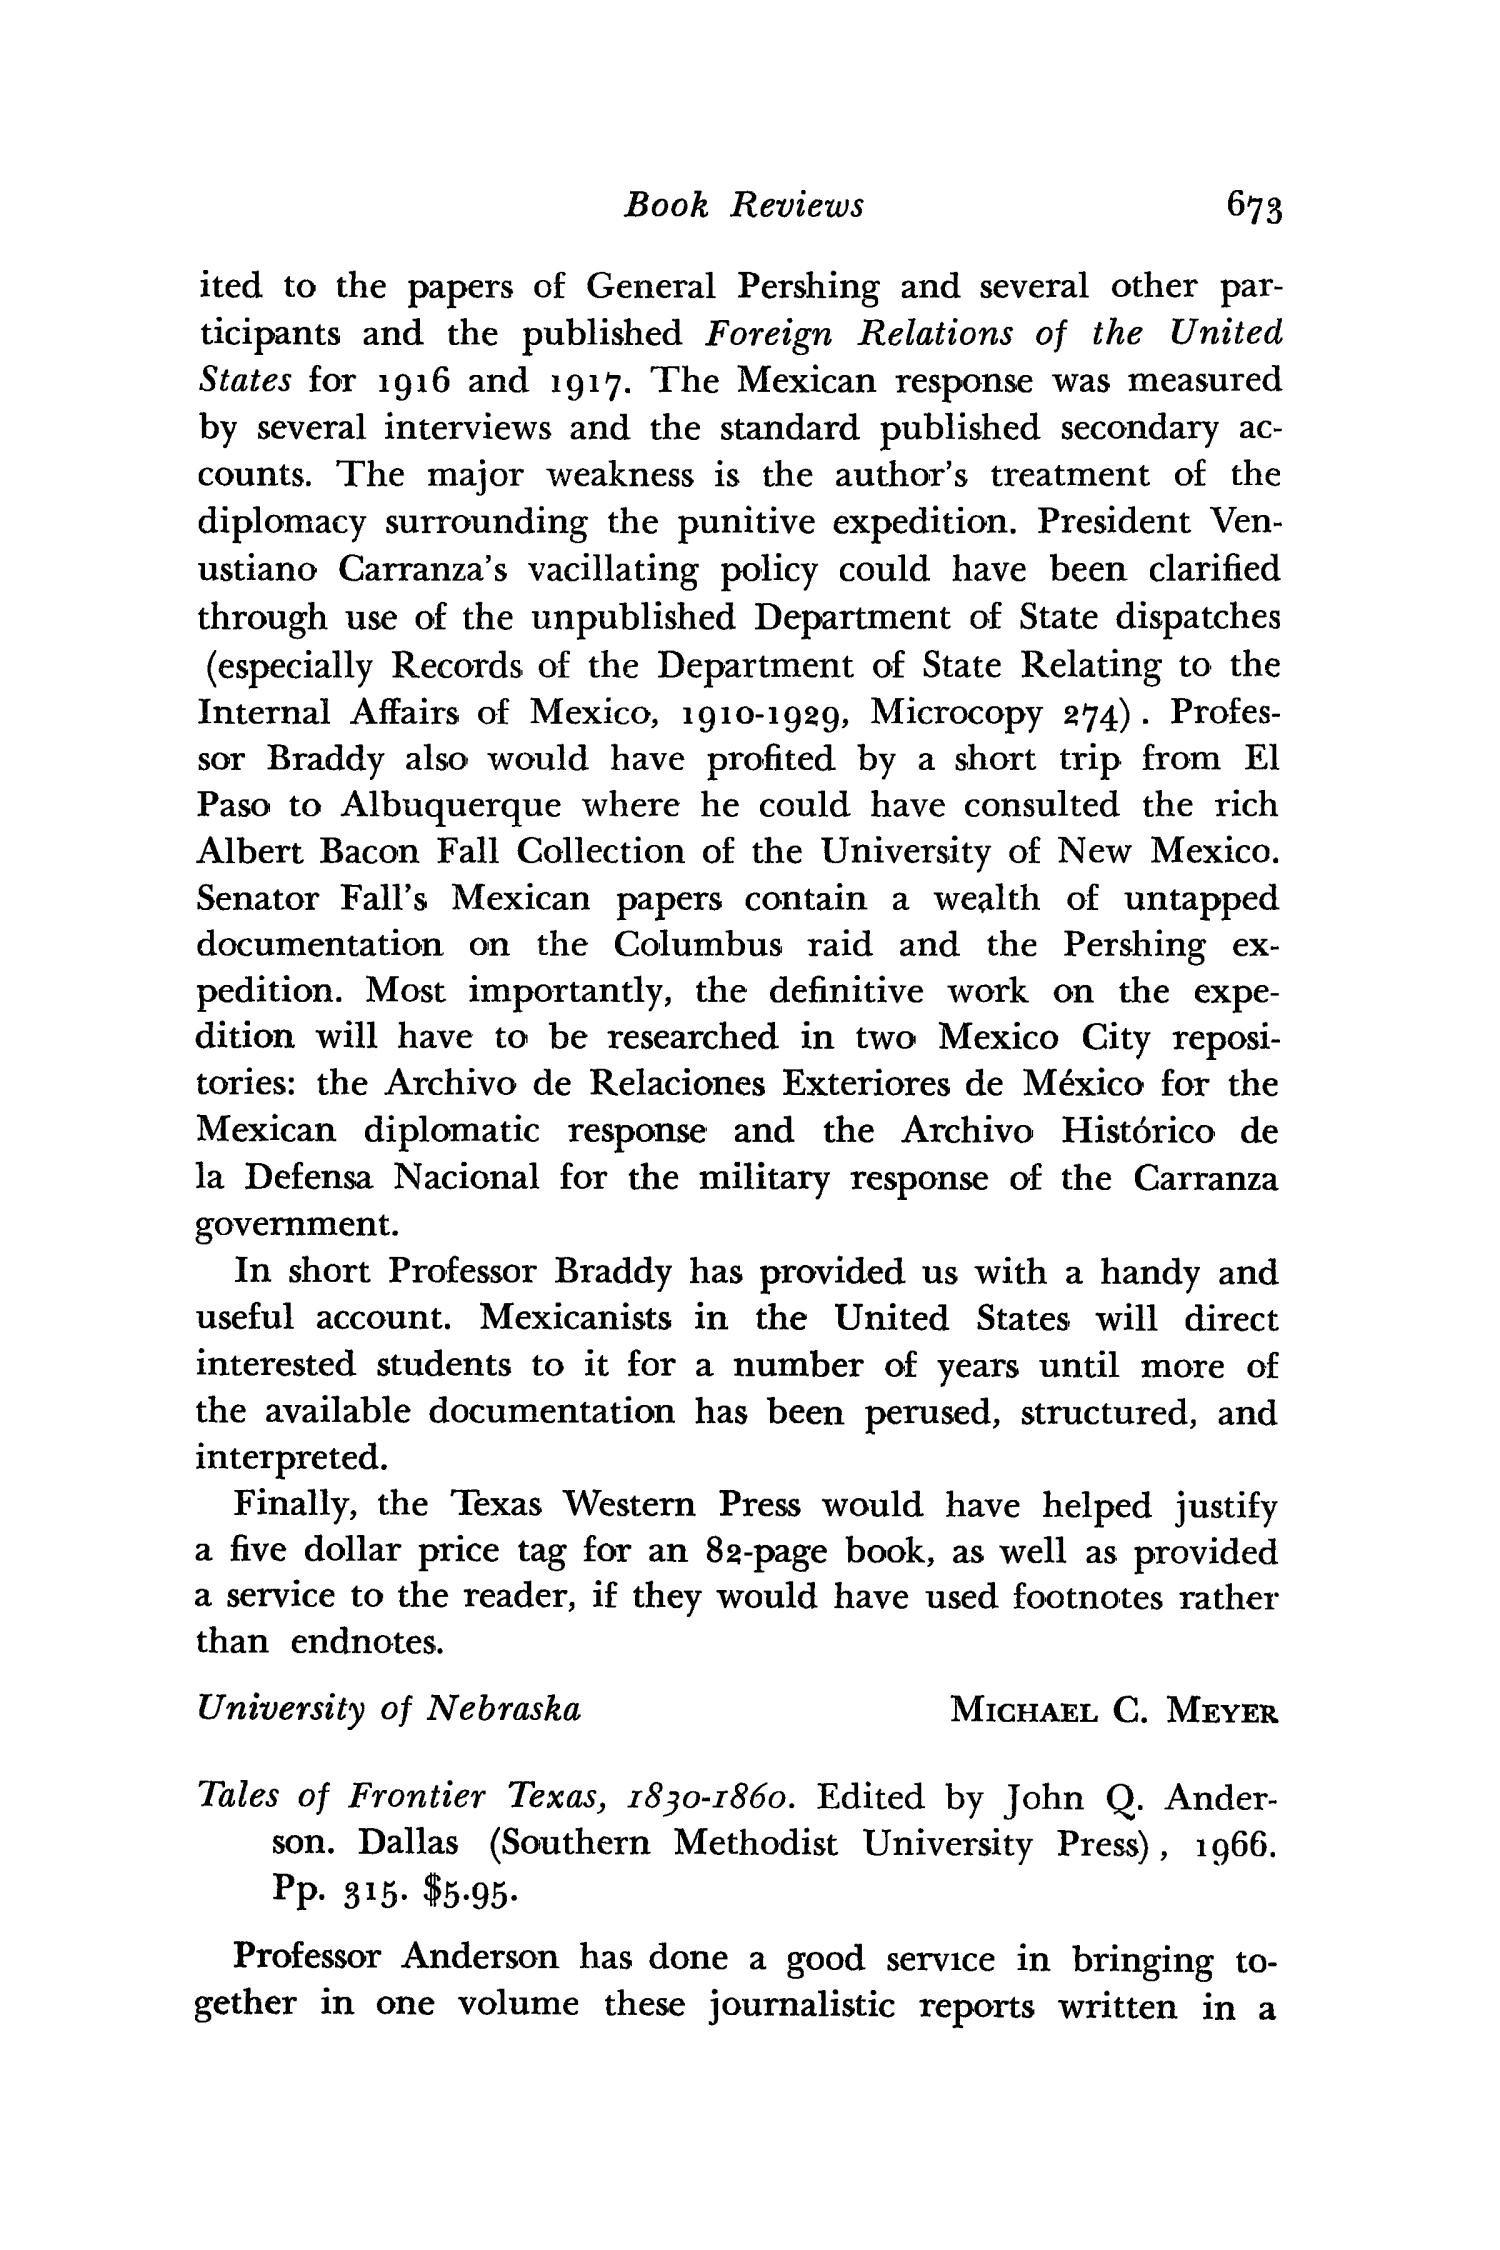 The Southwestern Historical Quarterly, Volume 70, July 1966 - April, 1967
                                                
                                                    673
                                                